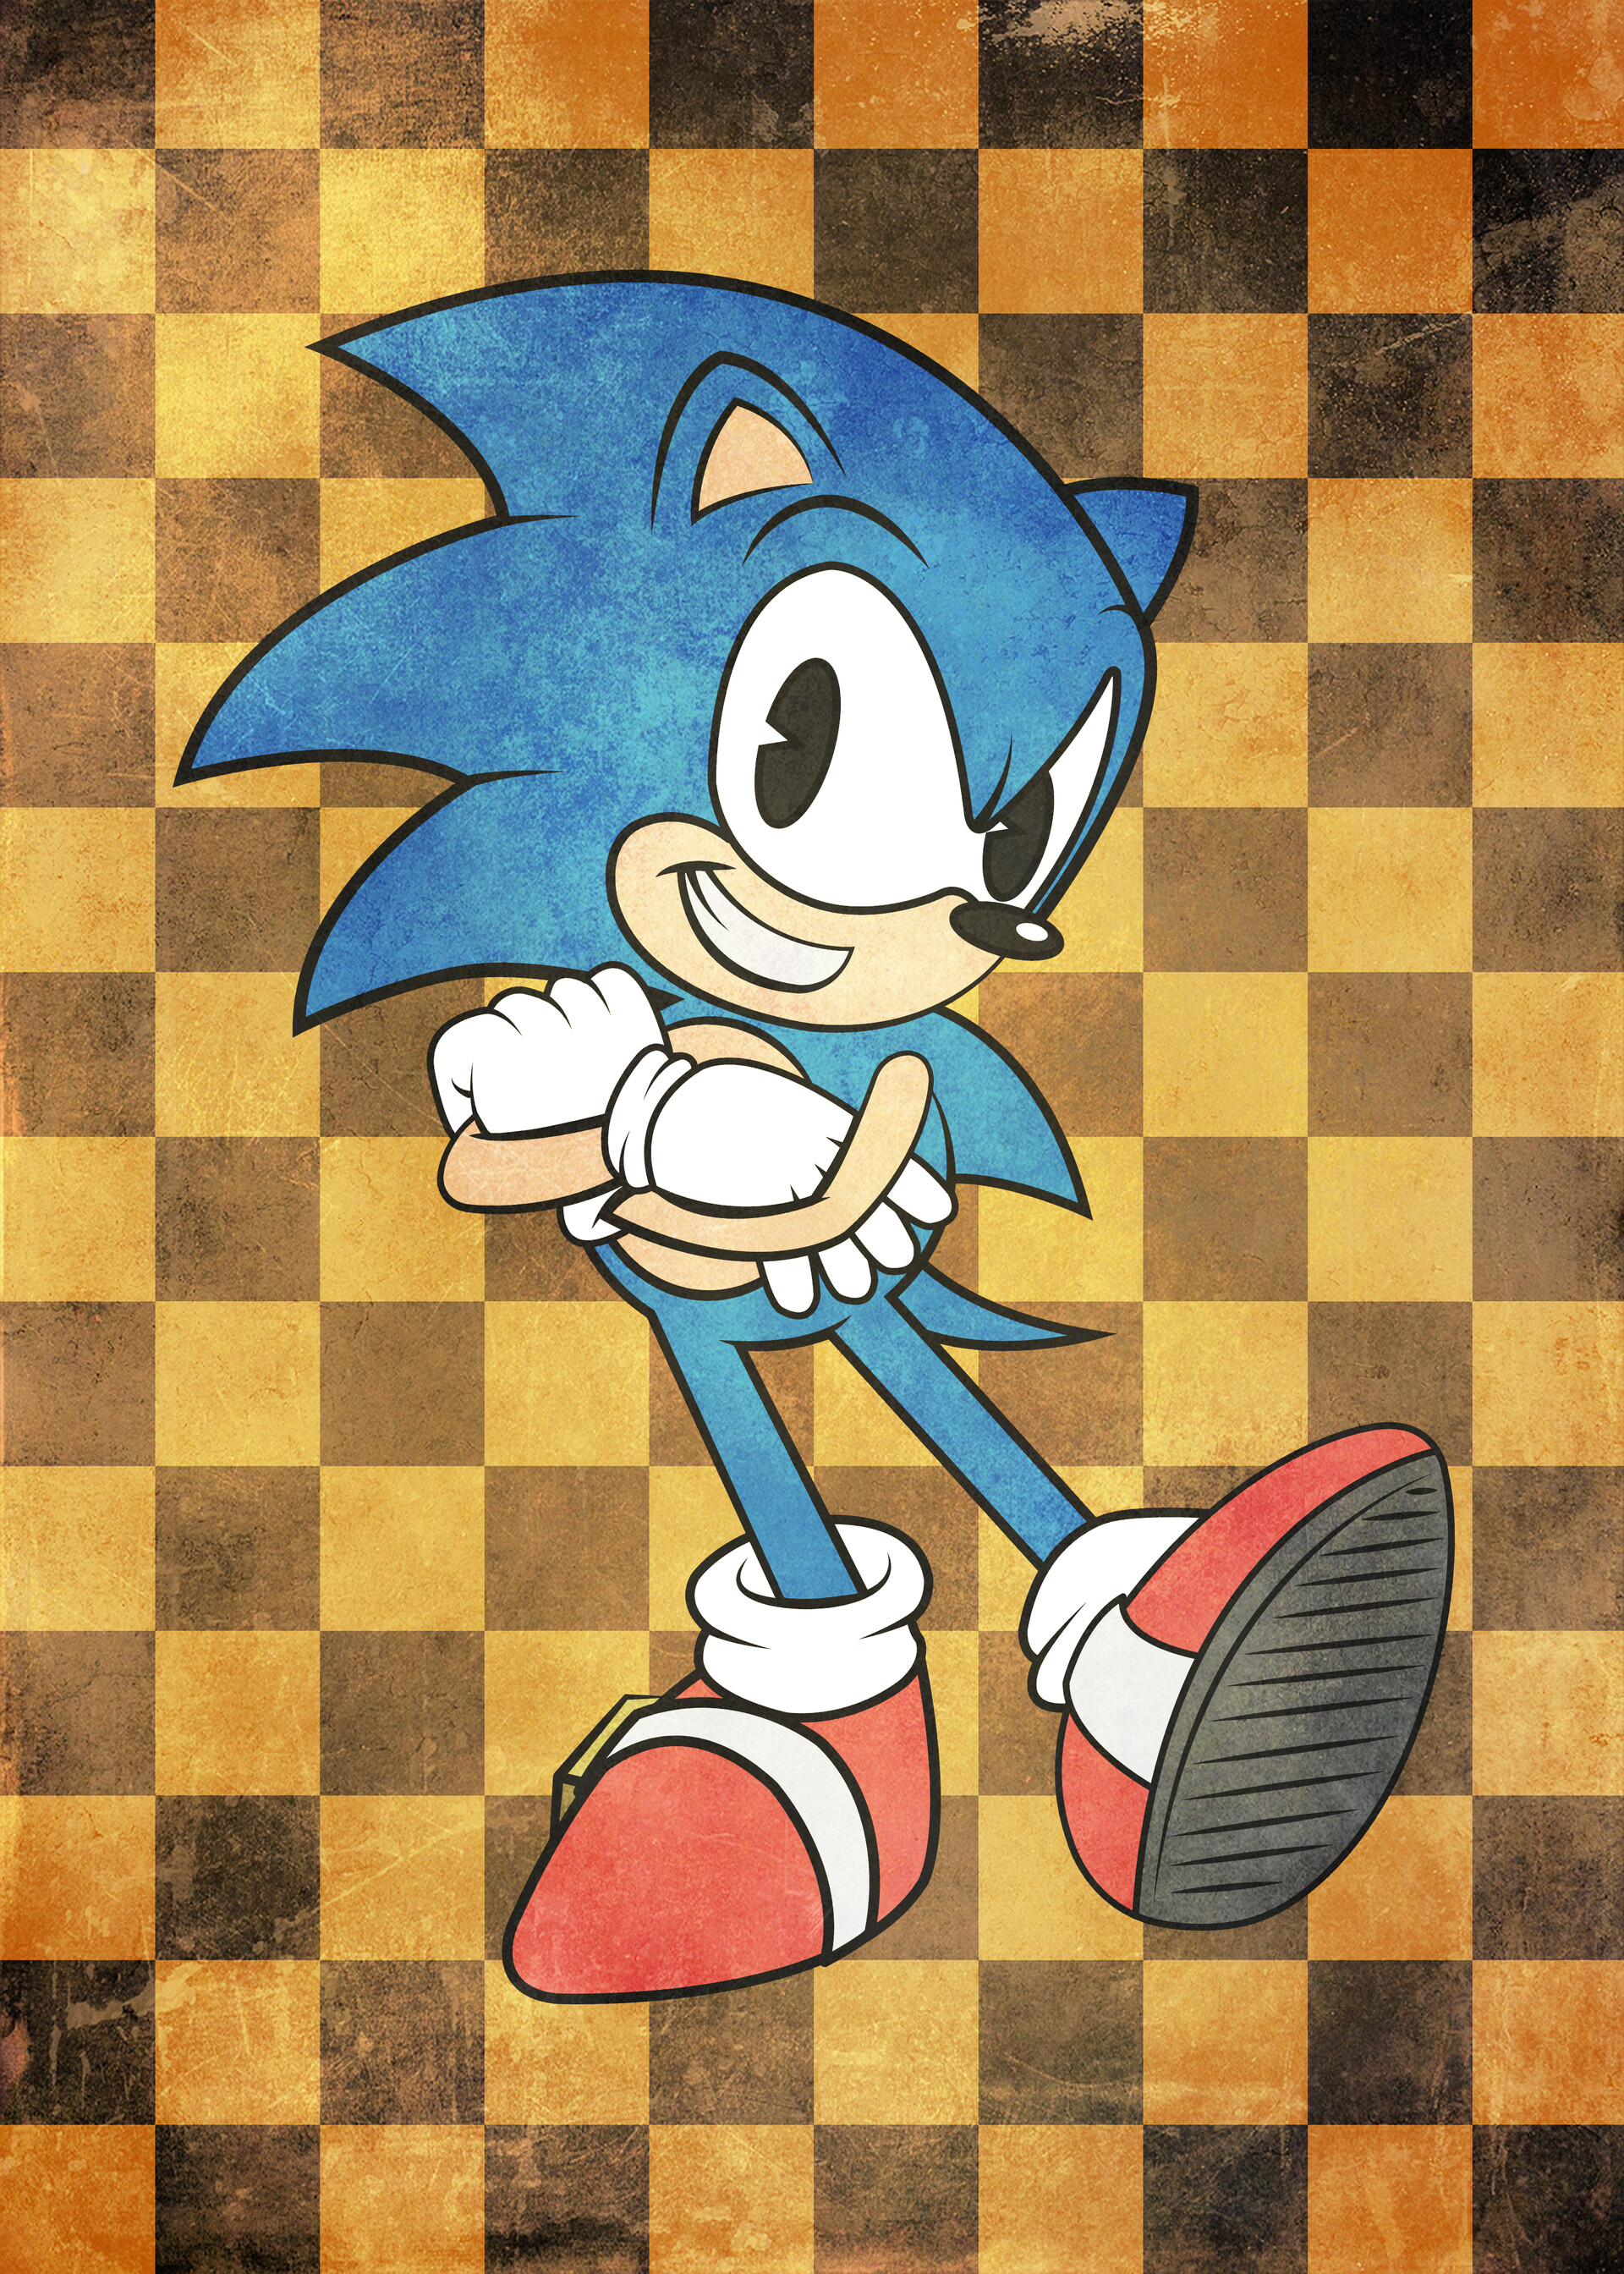 Sonic the Hedgehog Classic - Sonic Retro